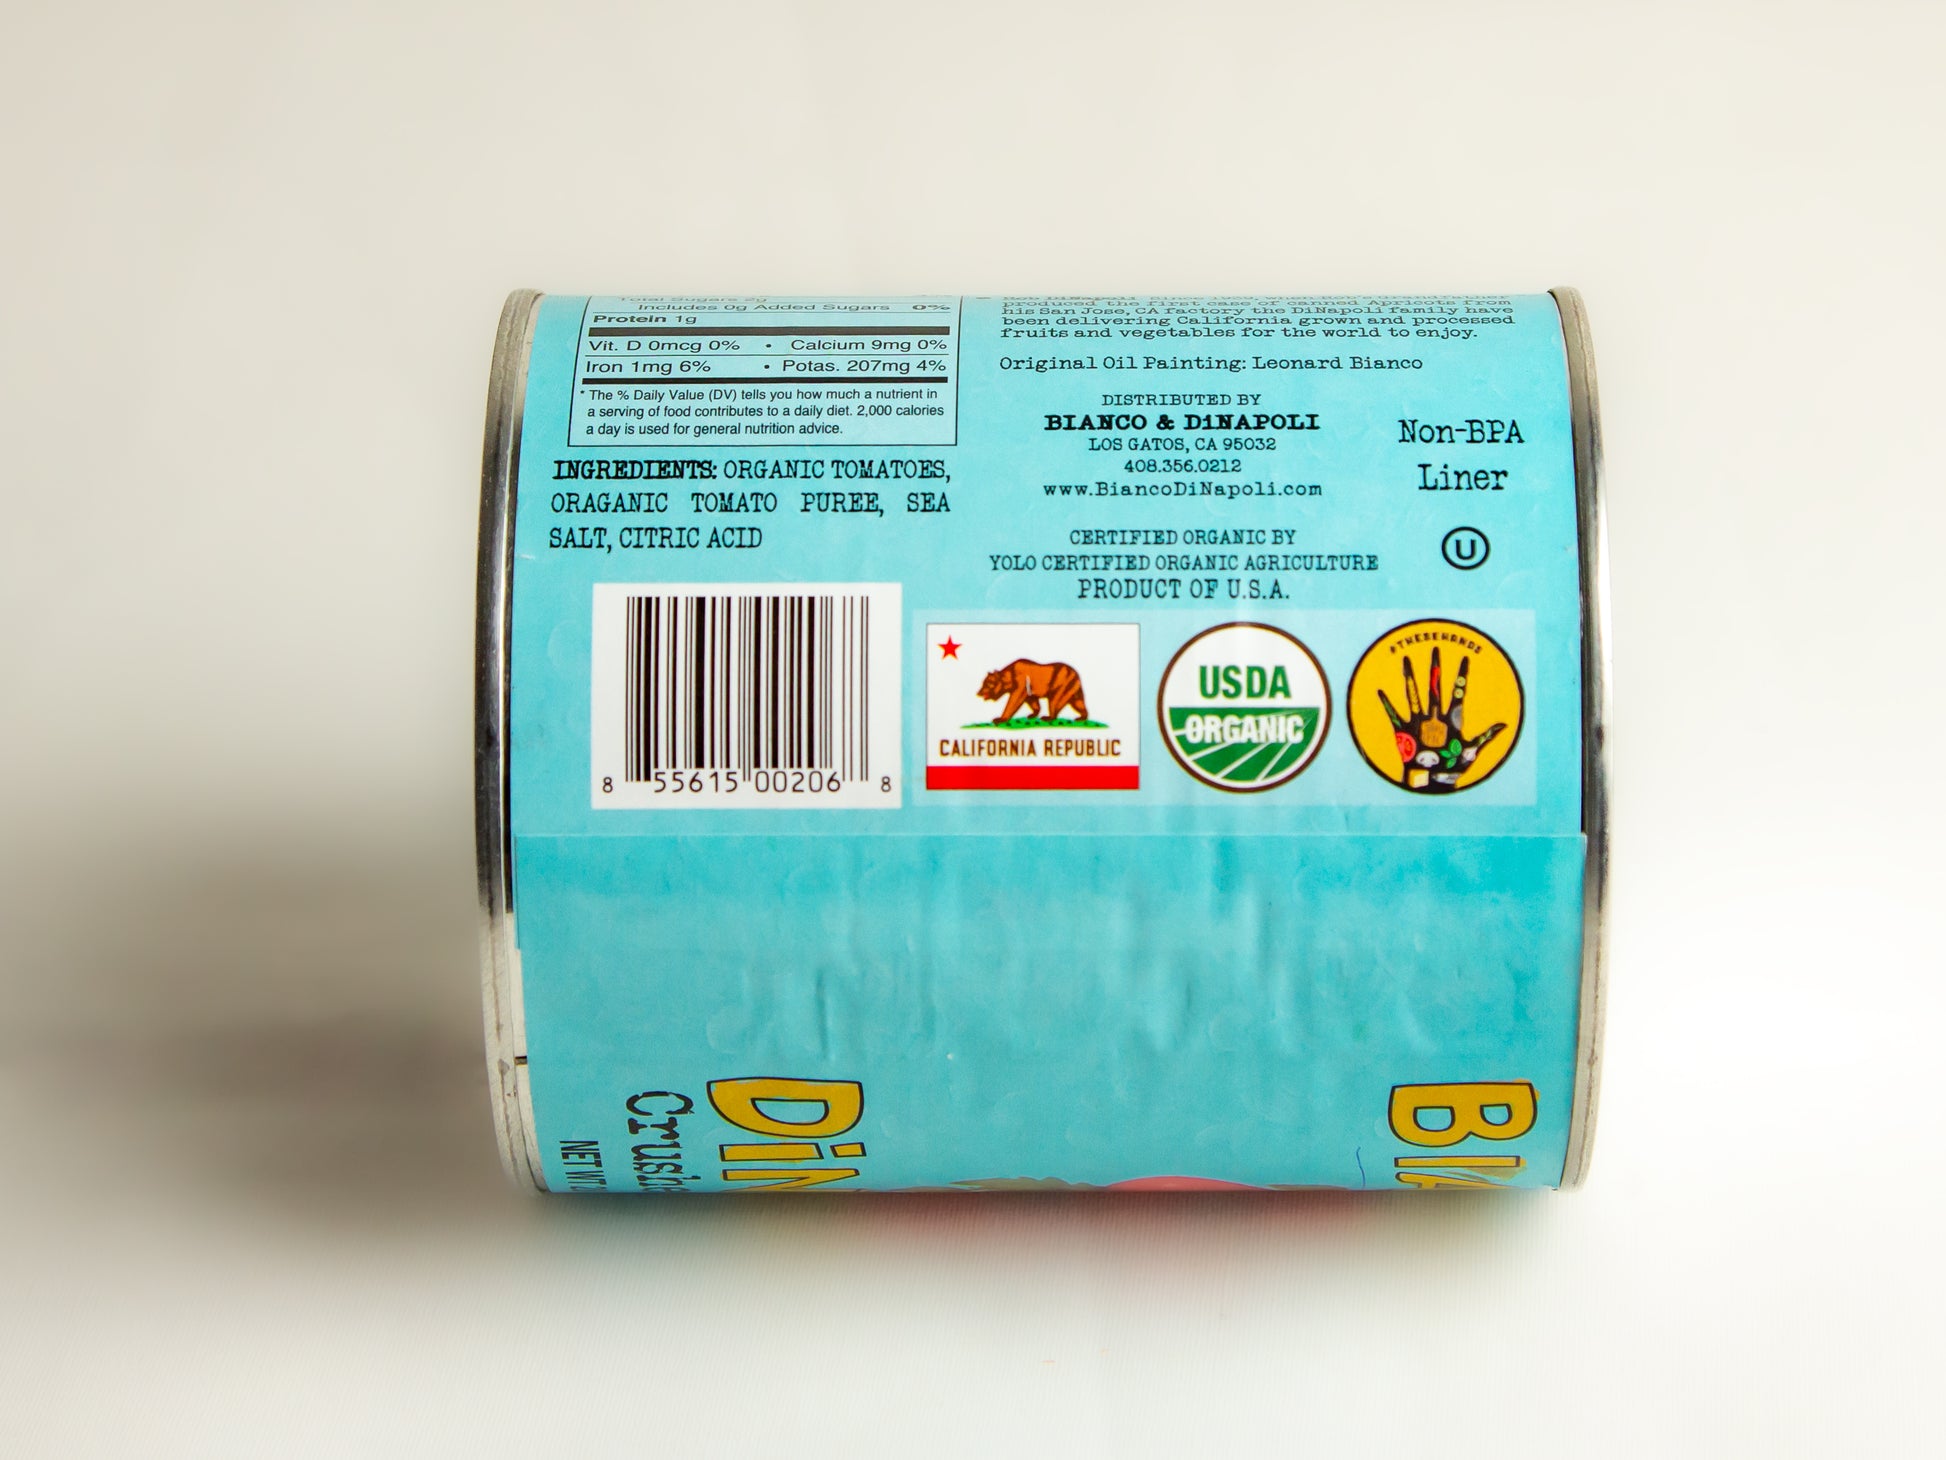 28 oz. can of Bianco di Napoli Crushed Tomatoes Organic Certification